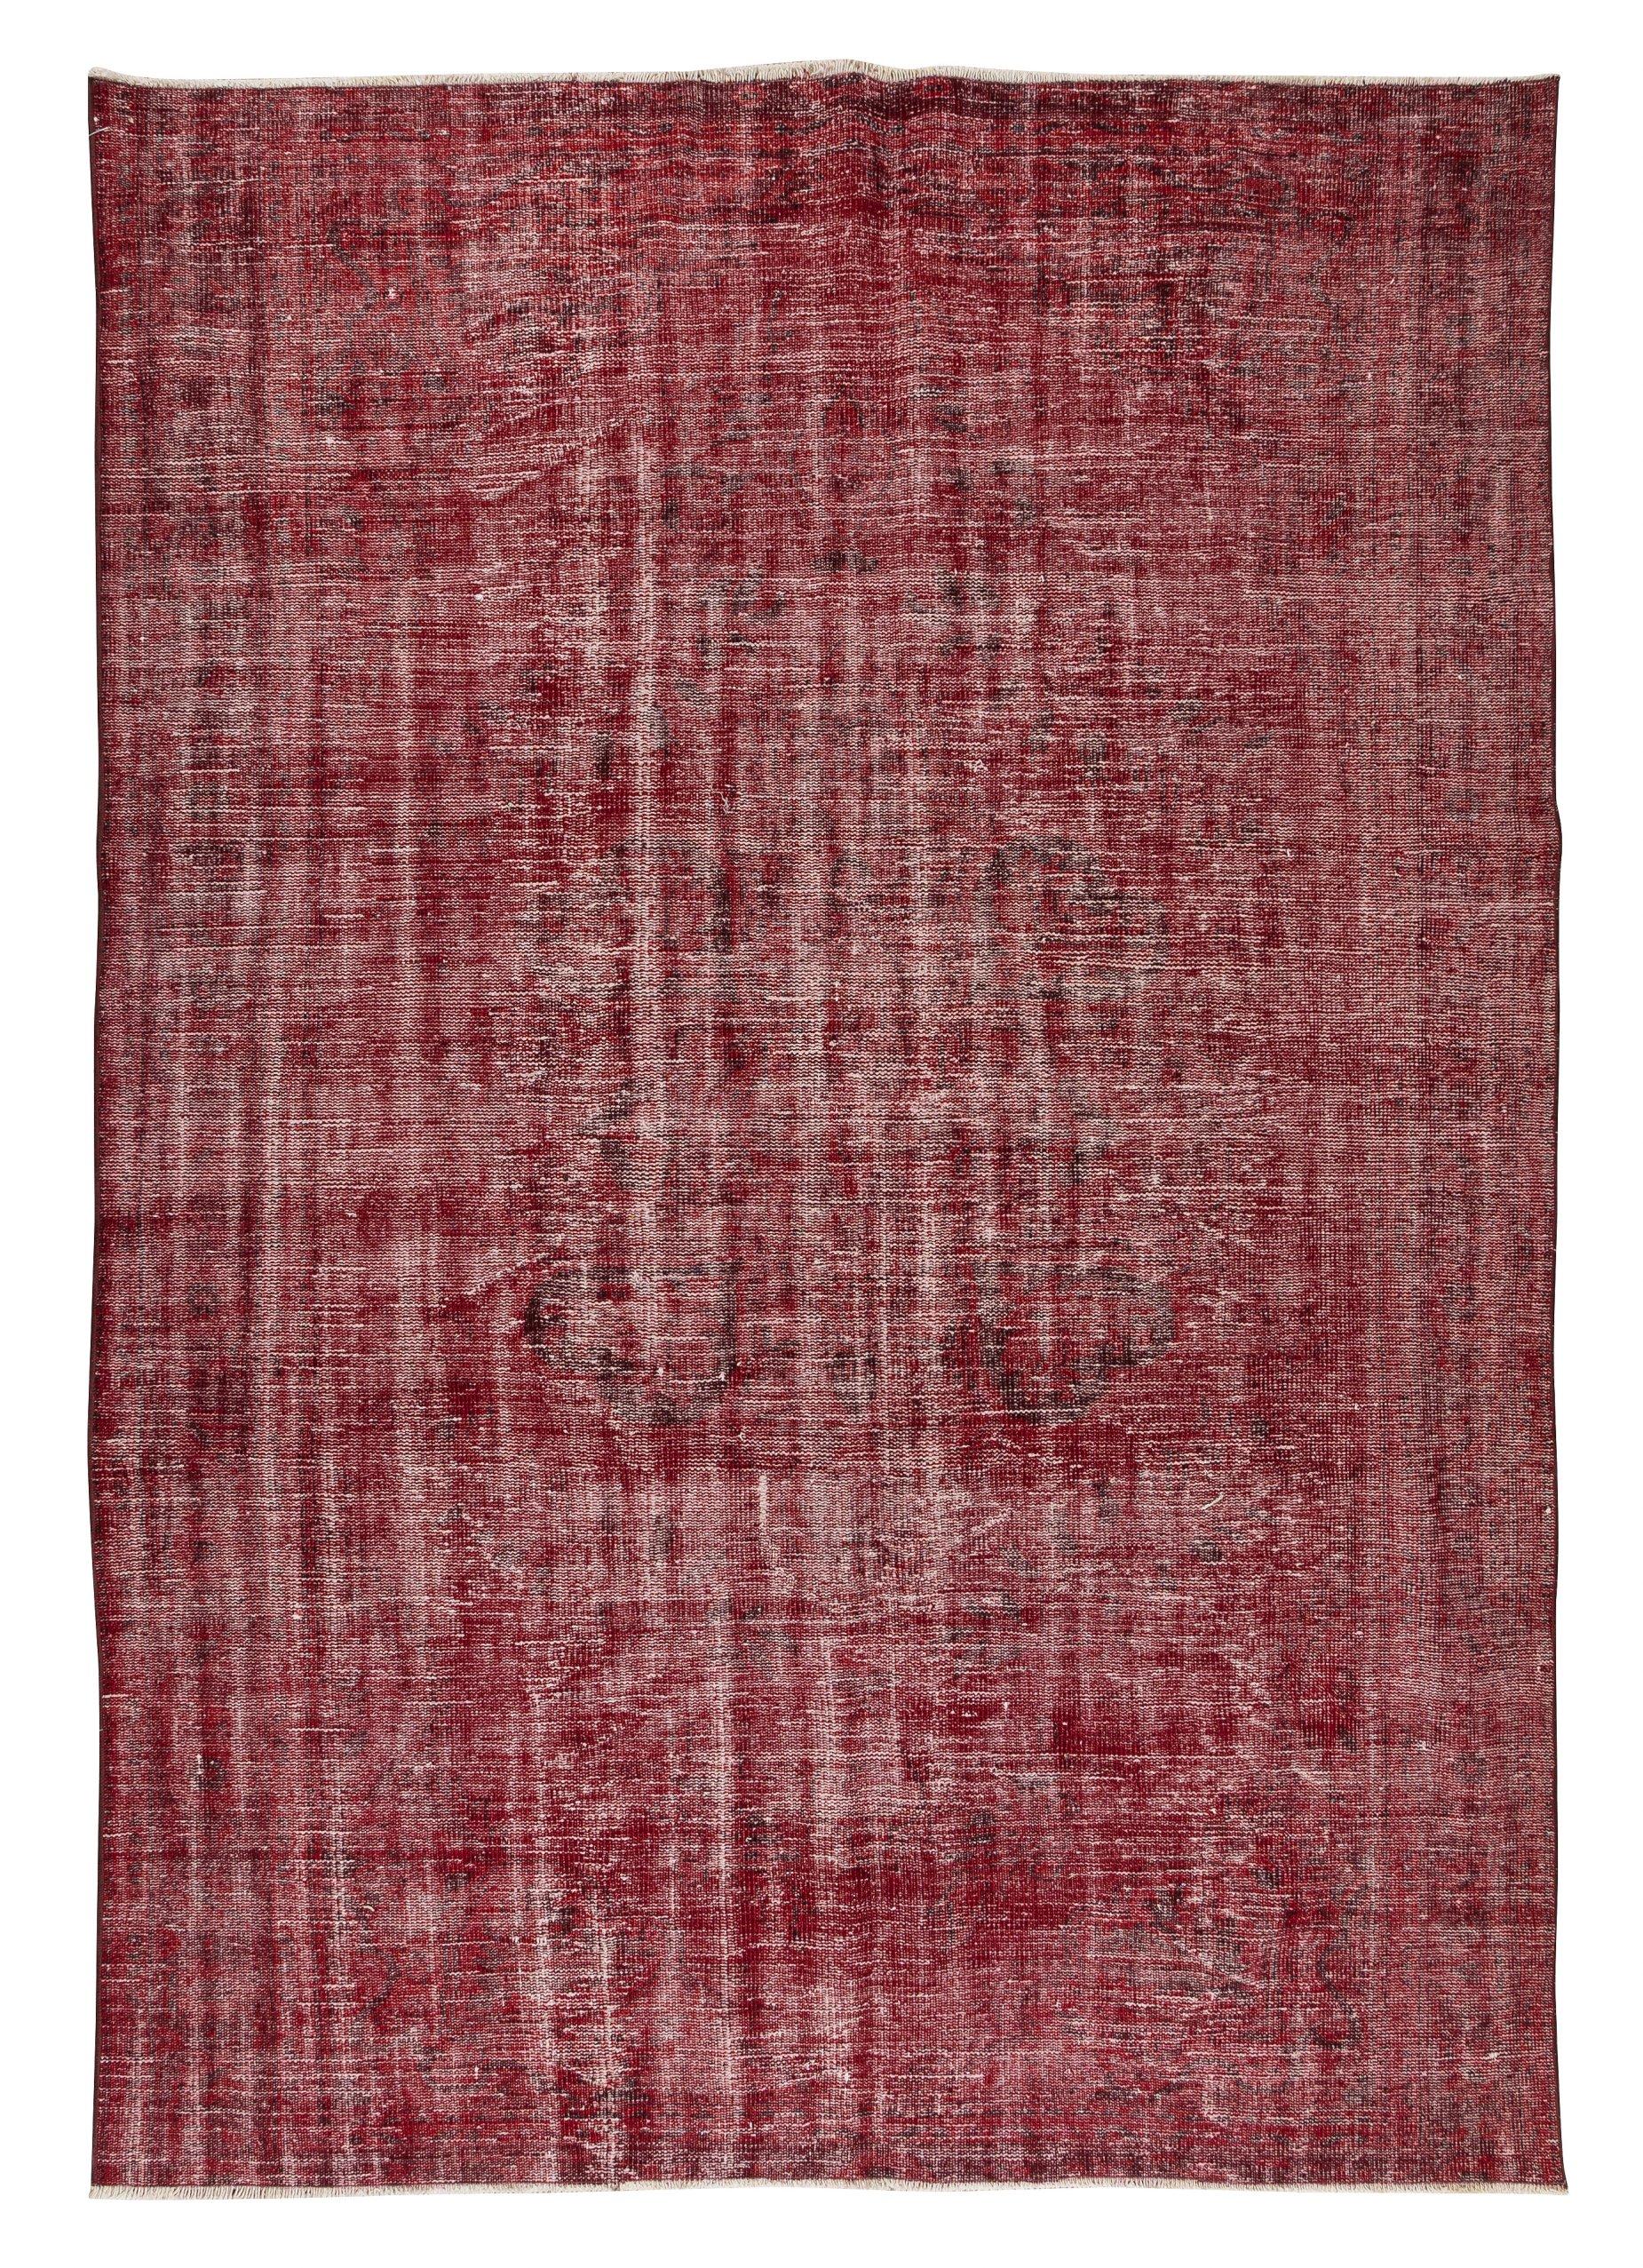 6.5x9.2 ft Vintage Handmade Rug in Red for Modern Interiors. Turkish Carpet